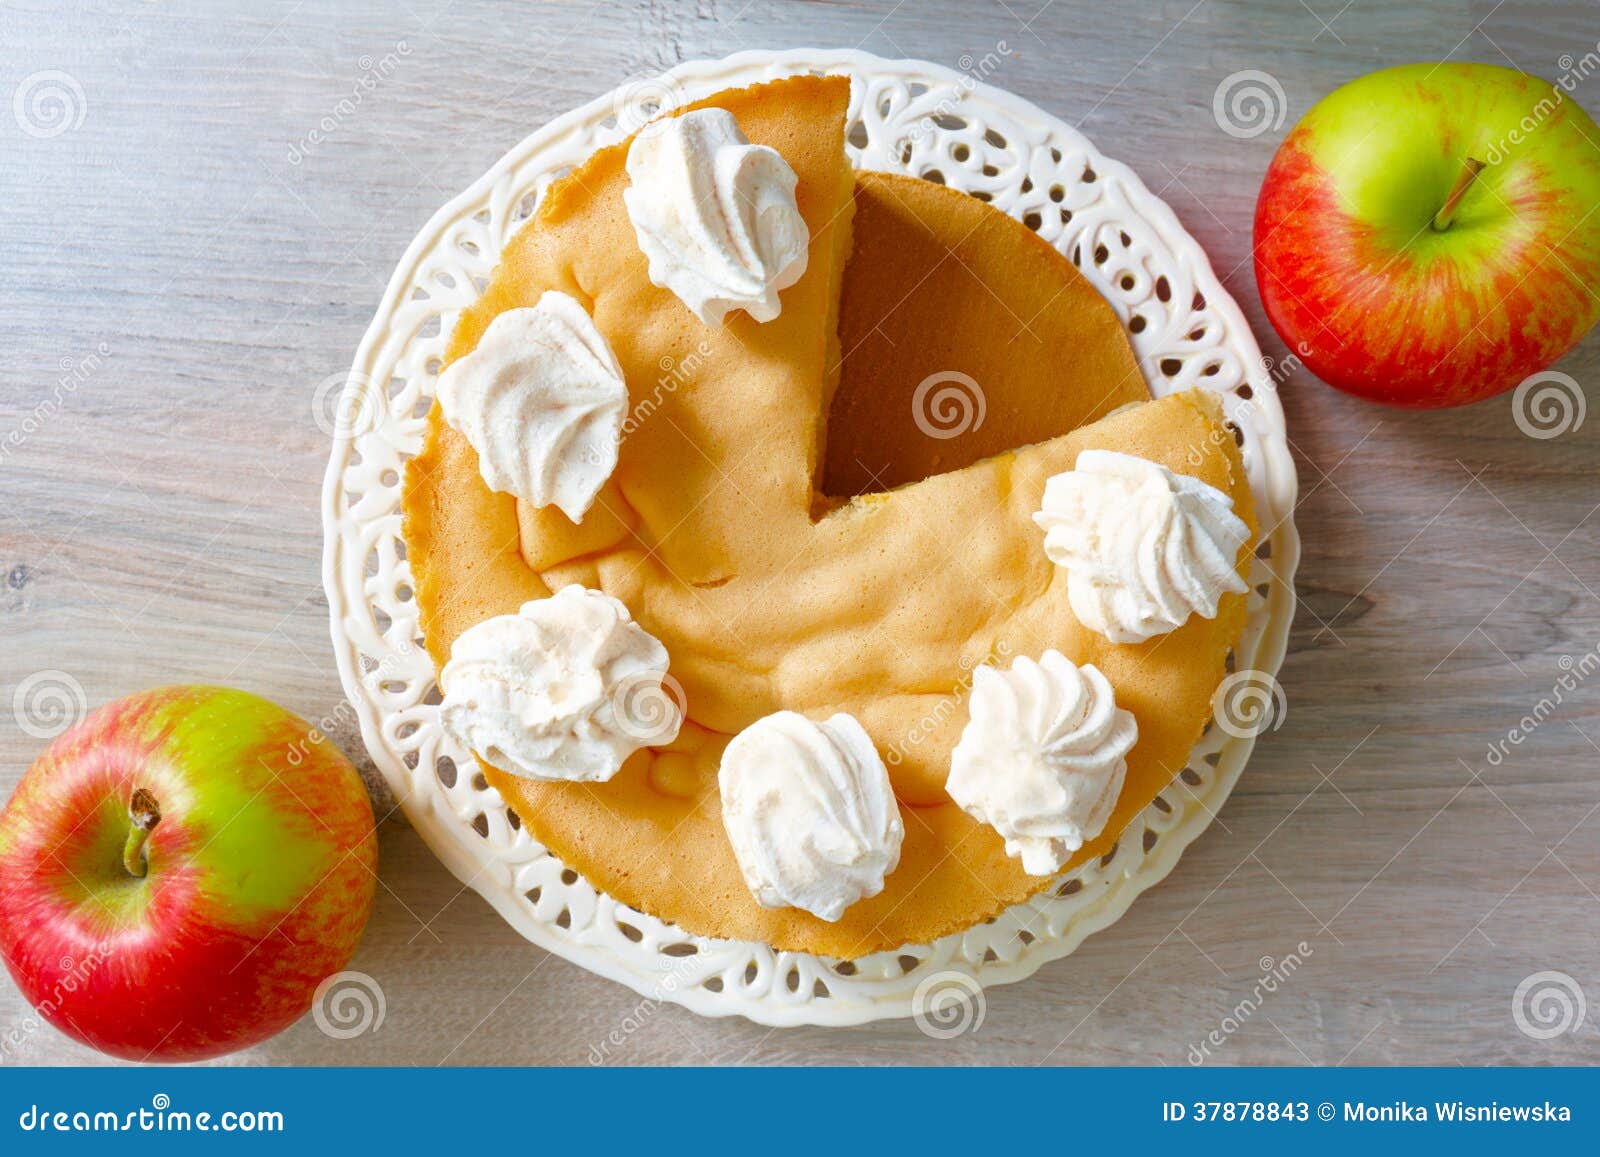 Mia's Kitchen: 青苹果果仁蛋糕 Fresh Apple Torte